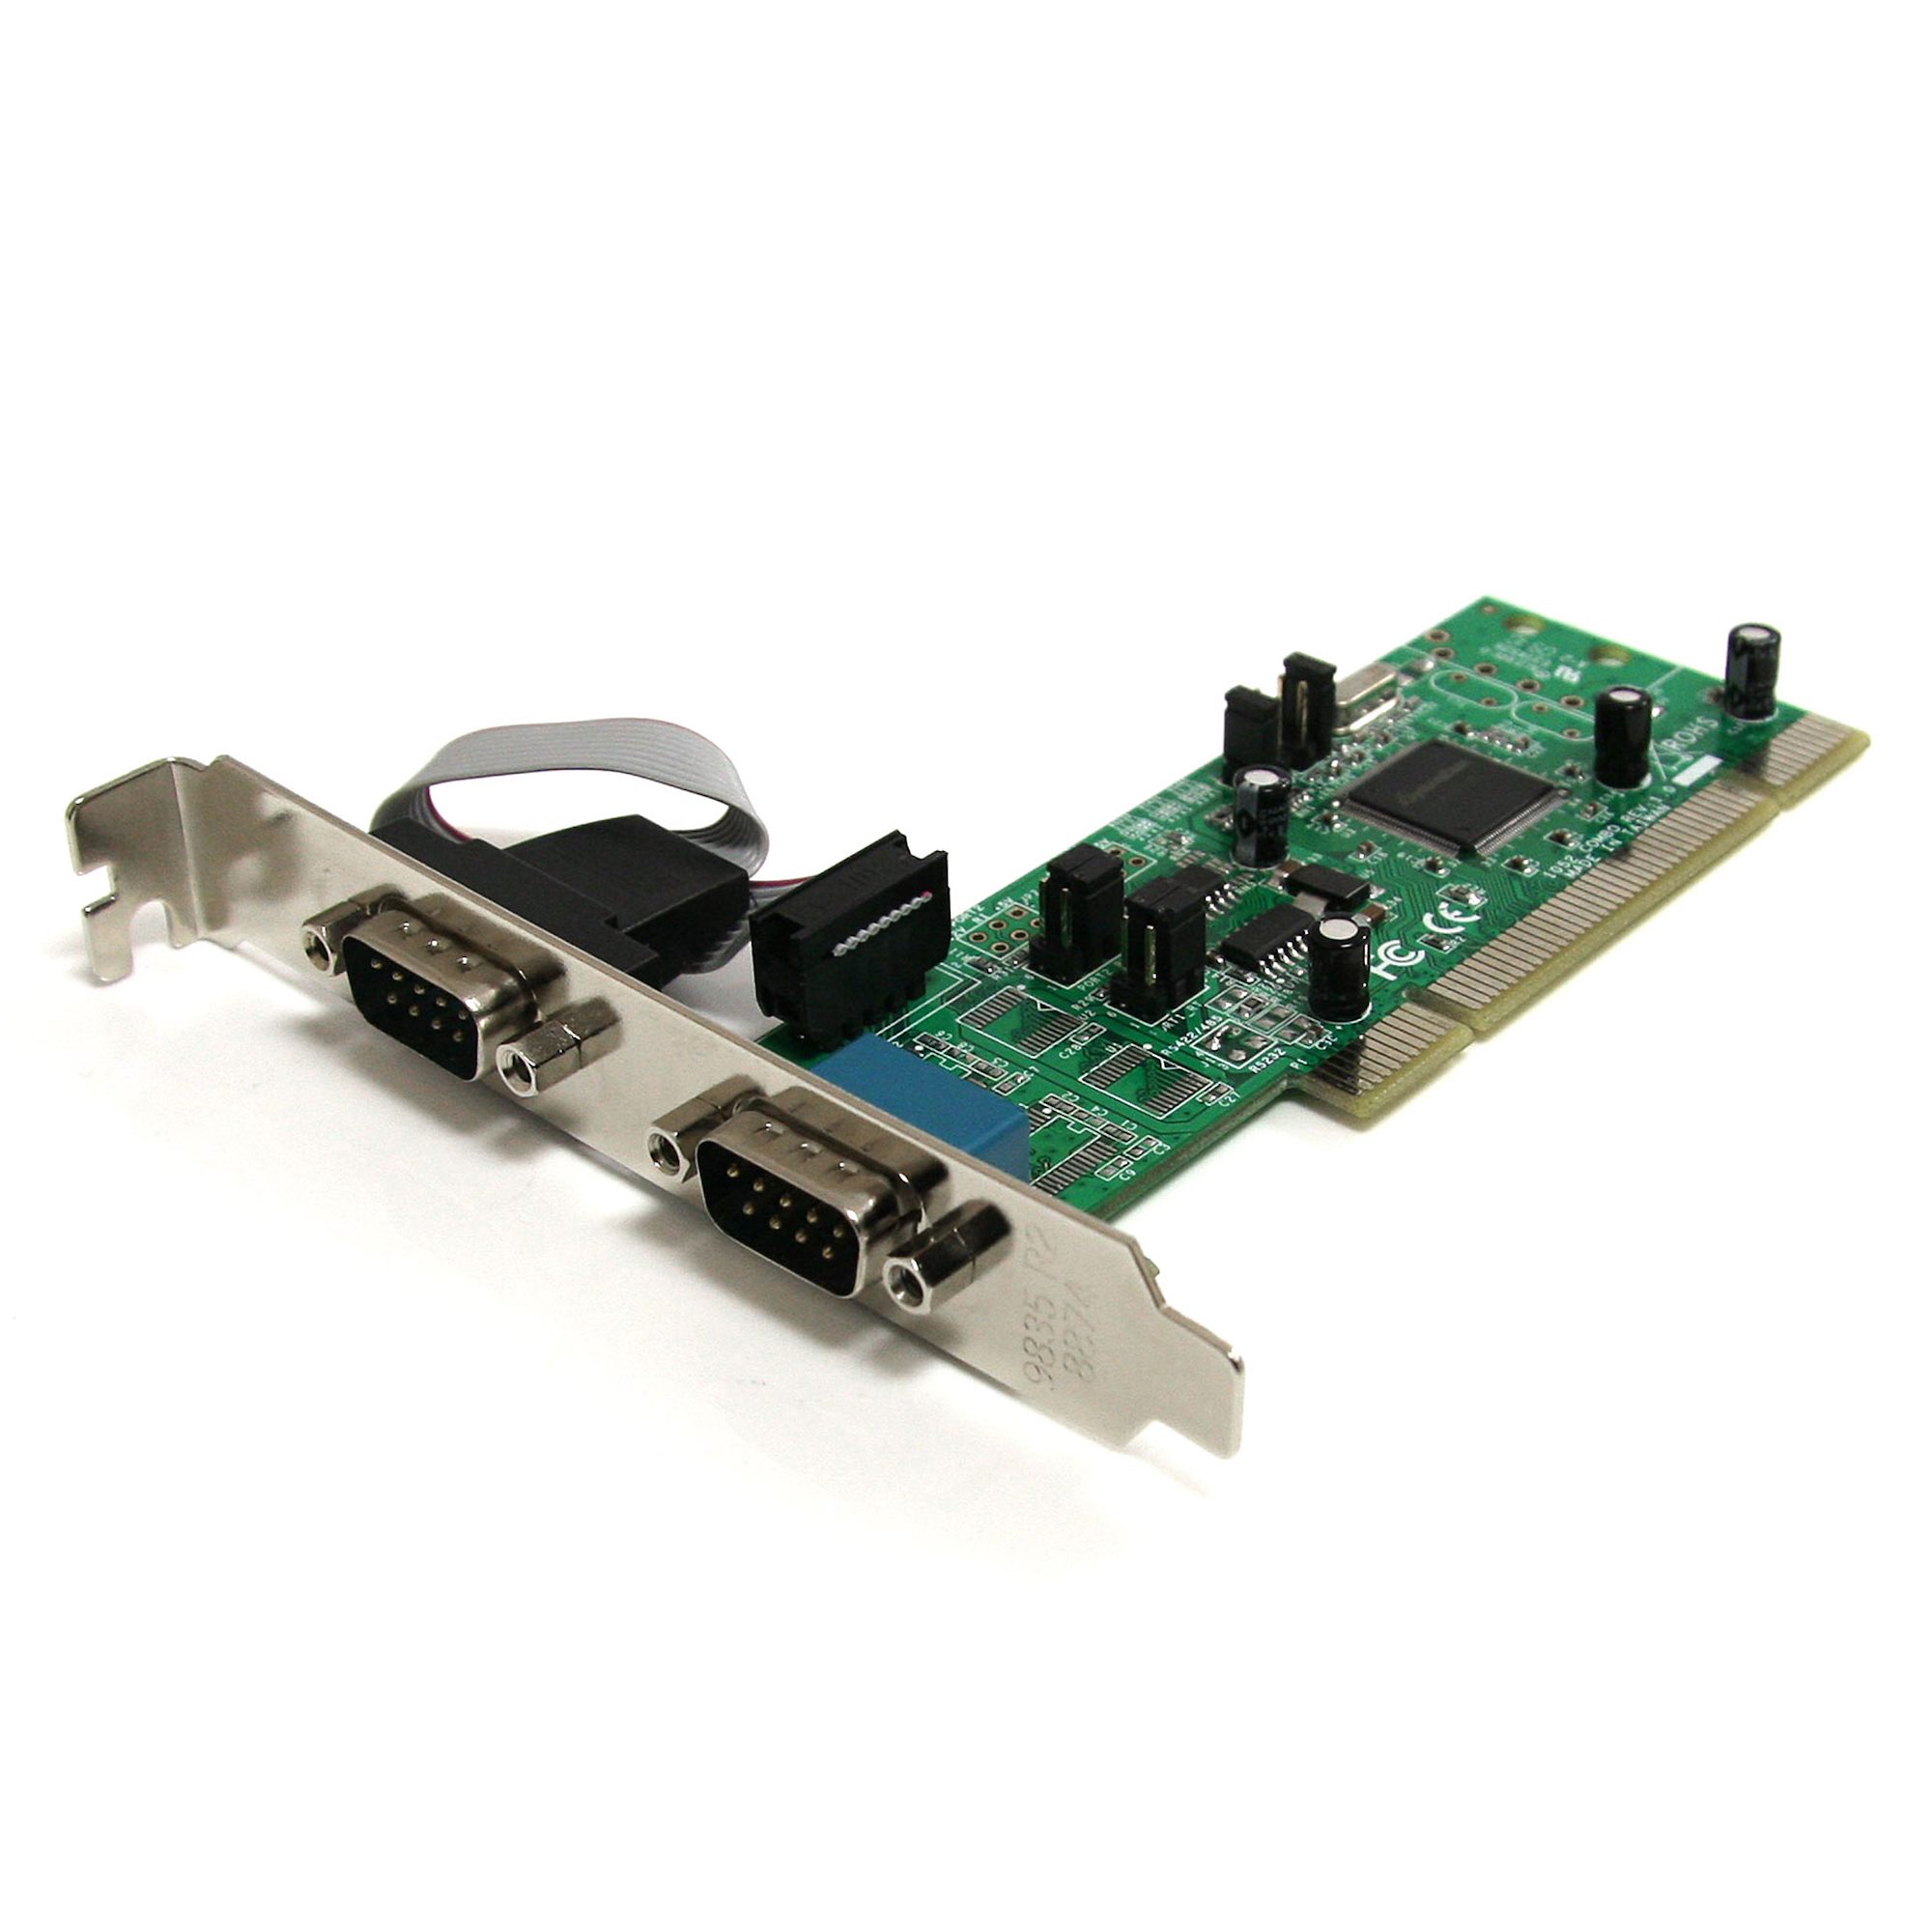 Measurement Computing PCI-COM422/485 Interface Card Dual Port